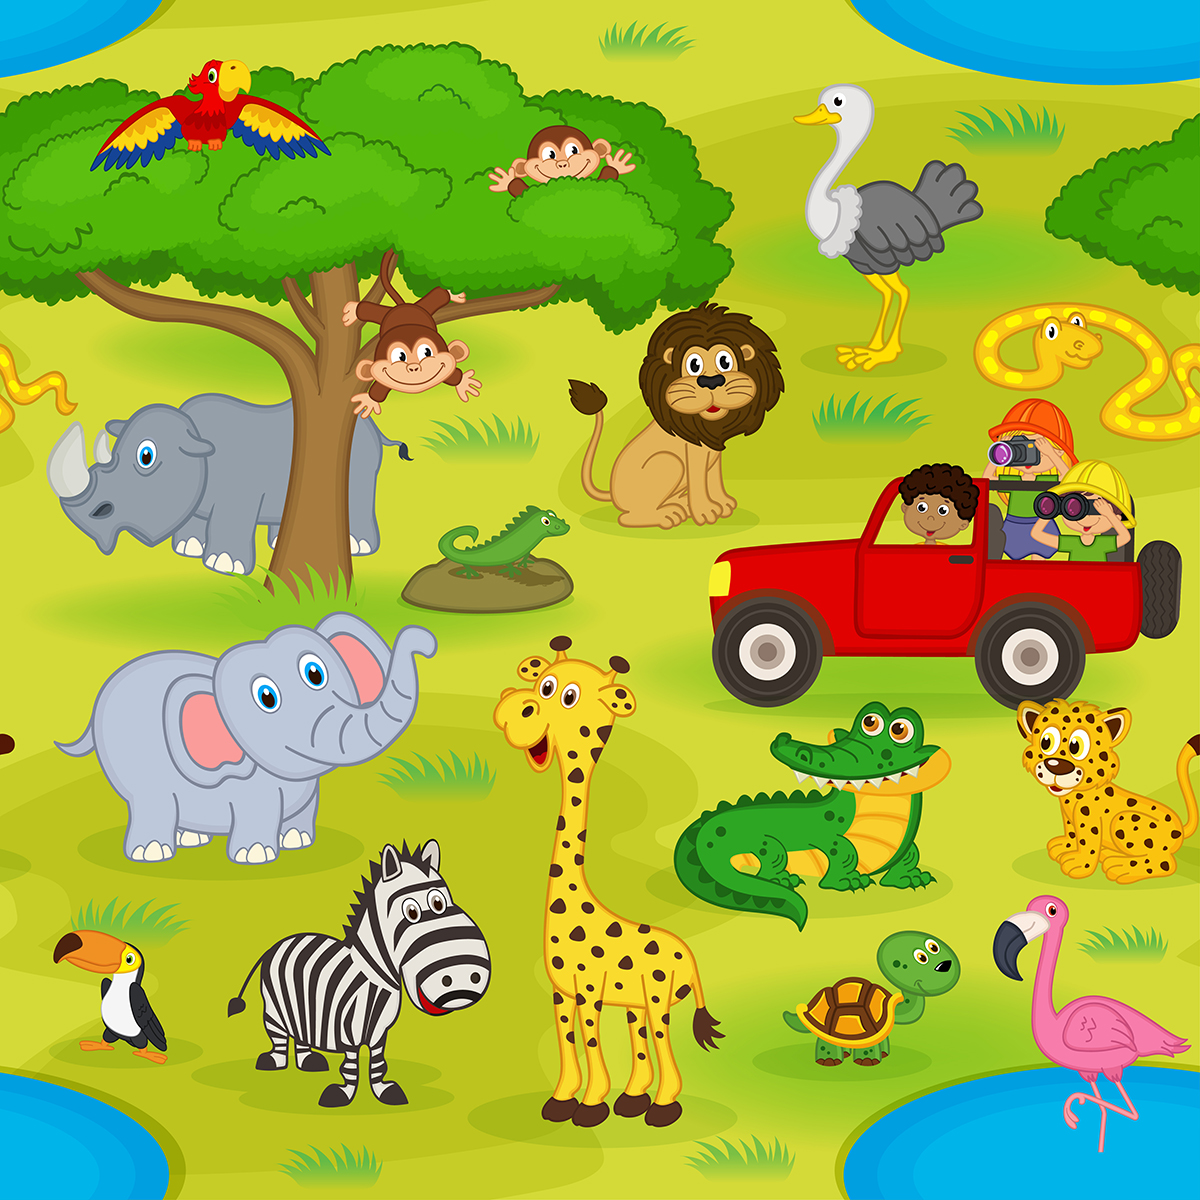 A cartoon of animals in a field